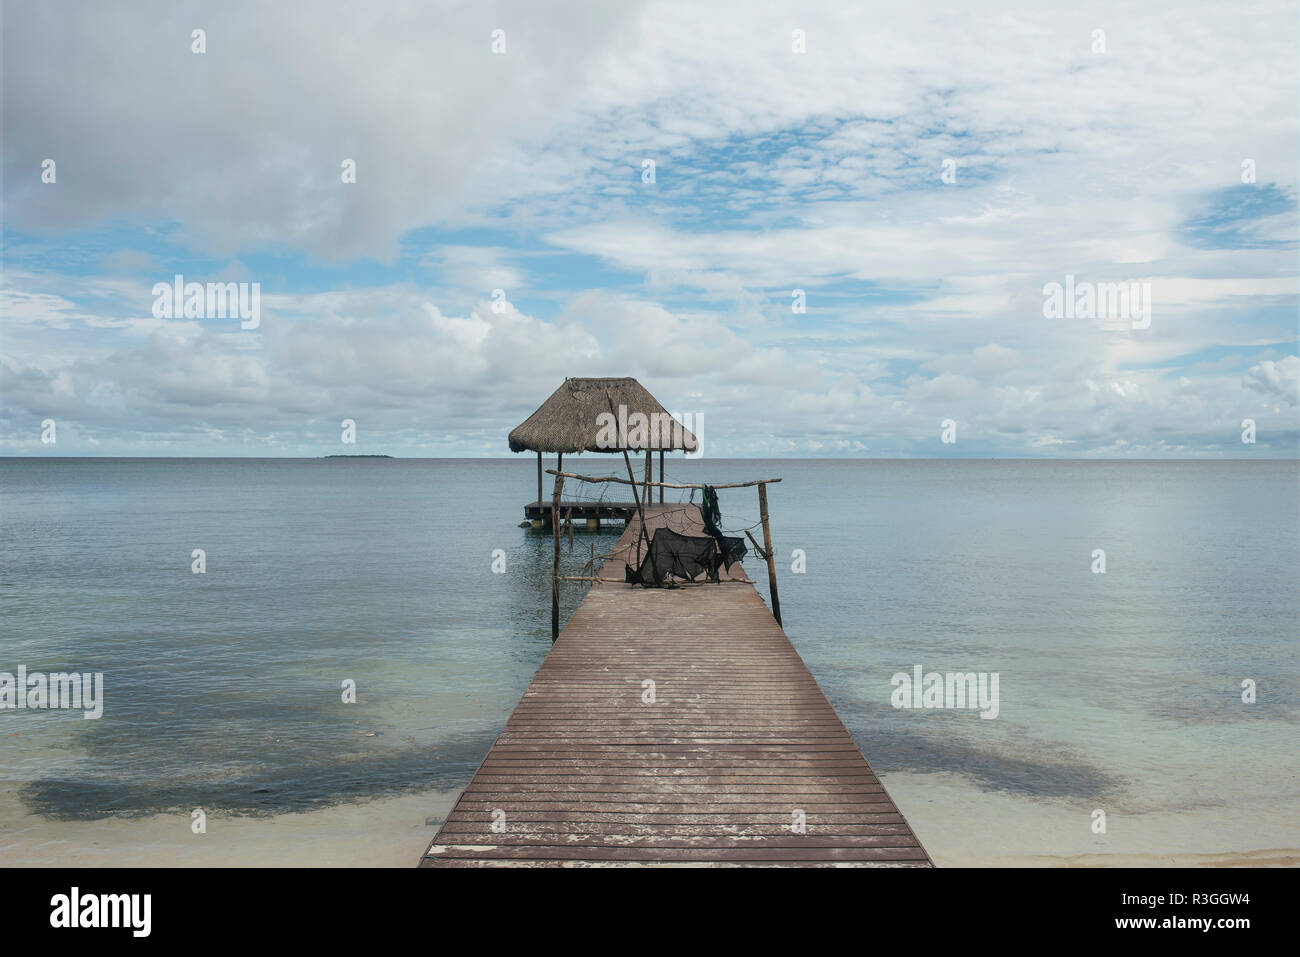 Dock mit Cabana (Mangrove Pavillon). Minimalistischer Wasserlandschaft der Isla Grande, Rosario Inseln. Cartagena de Indias, Kolumbien. Okt 2018 Stockfoto